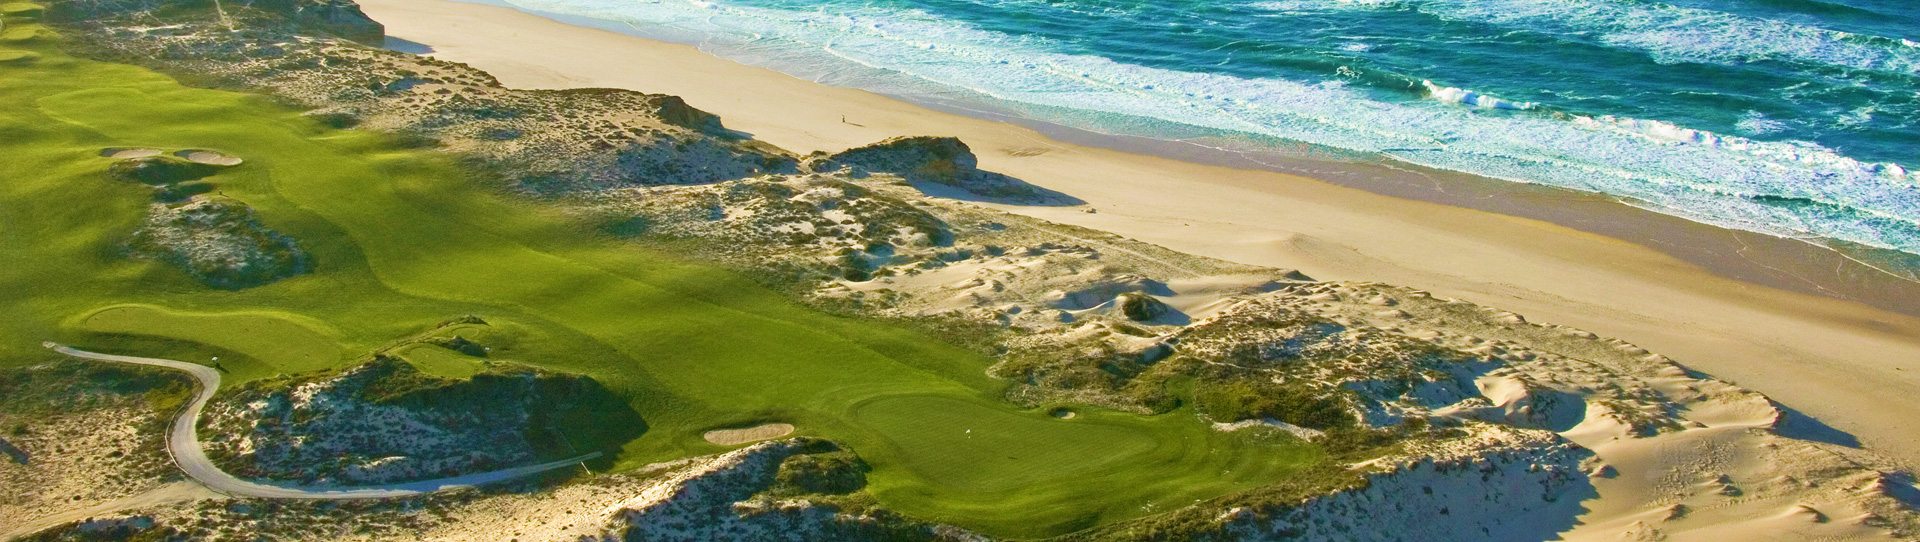 Portugal golf courses - Praia Del Rey - Photo 2